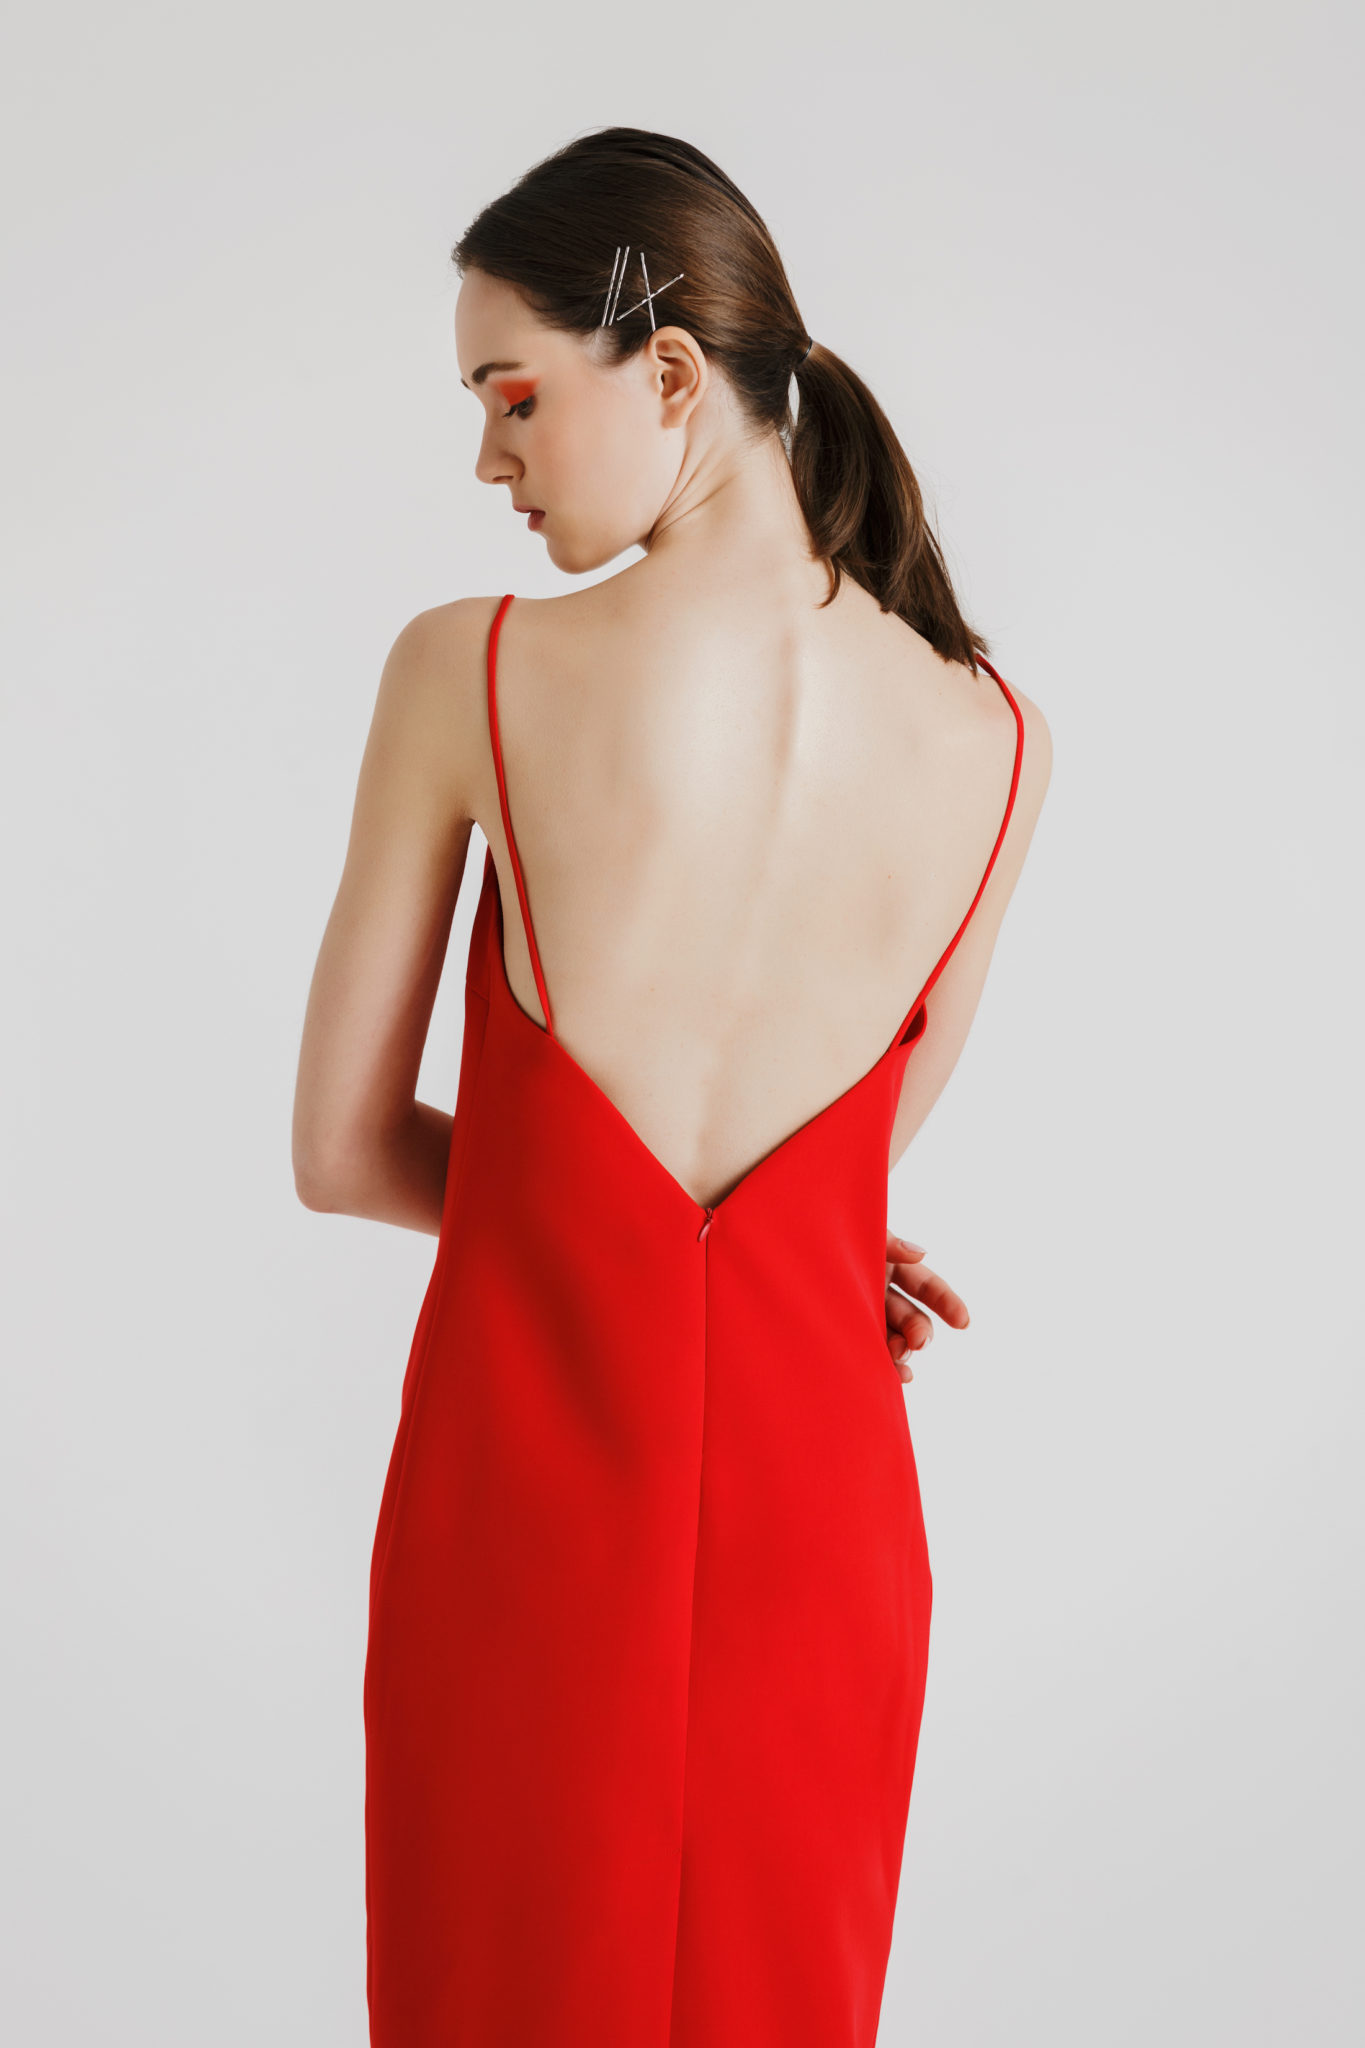 Image Червона сукня